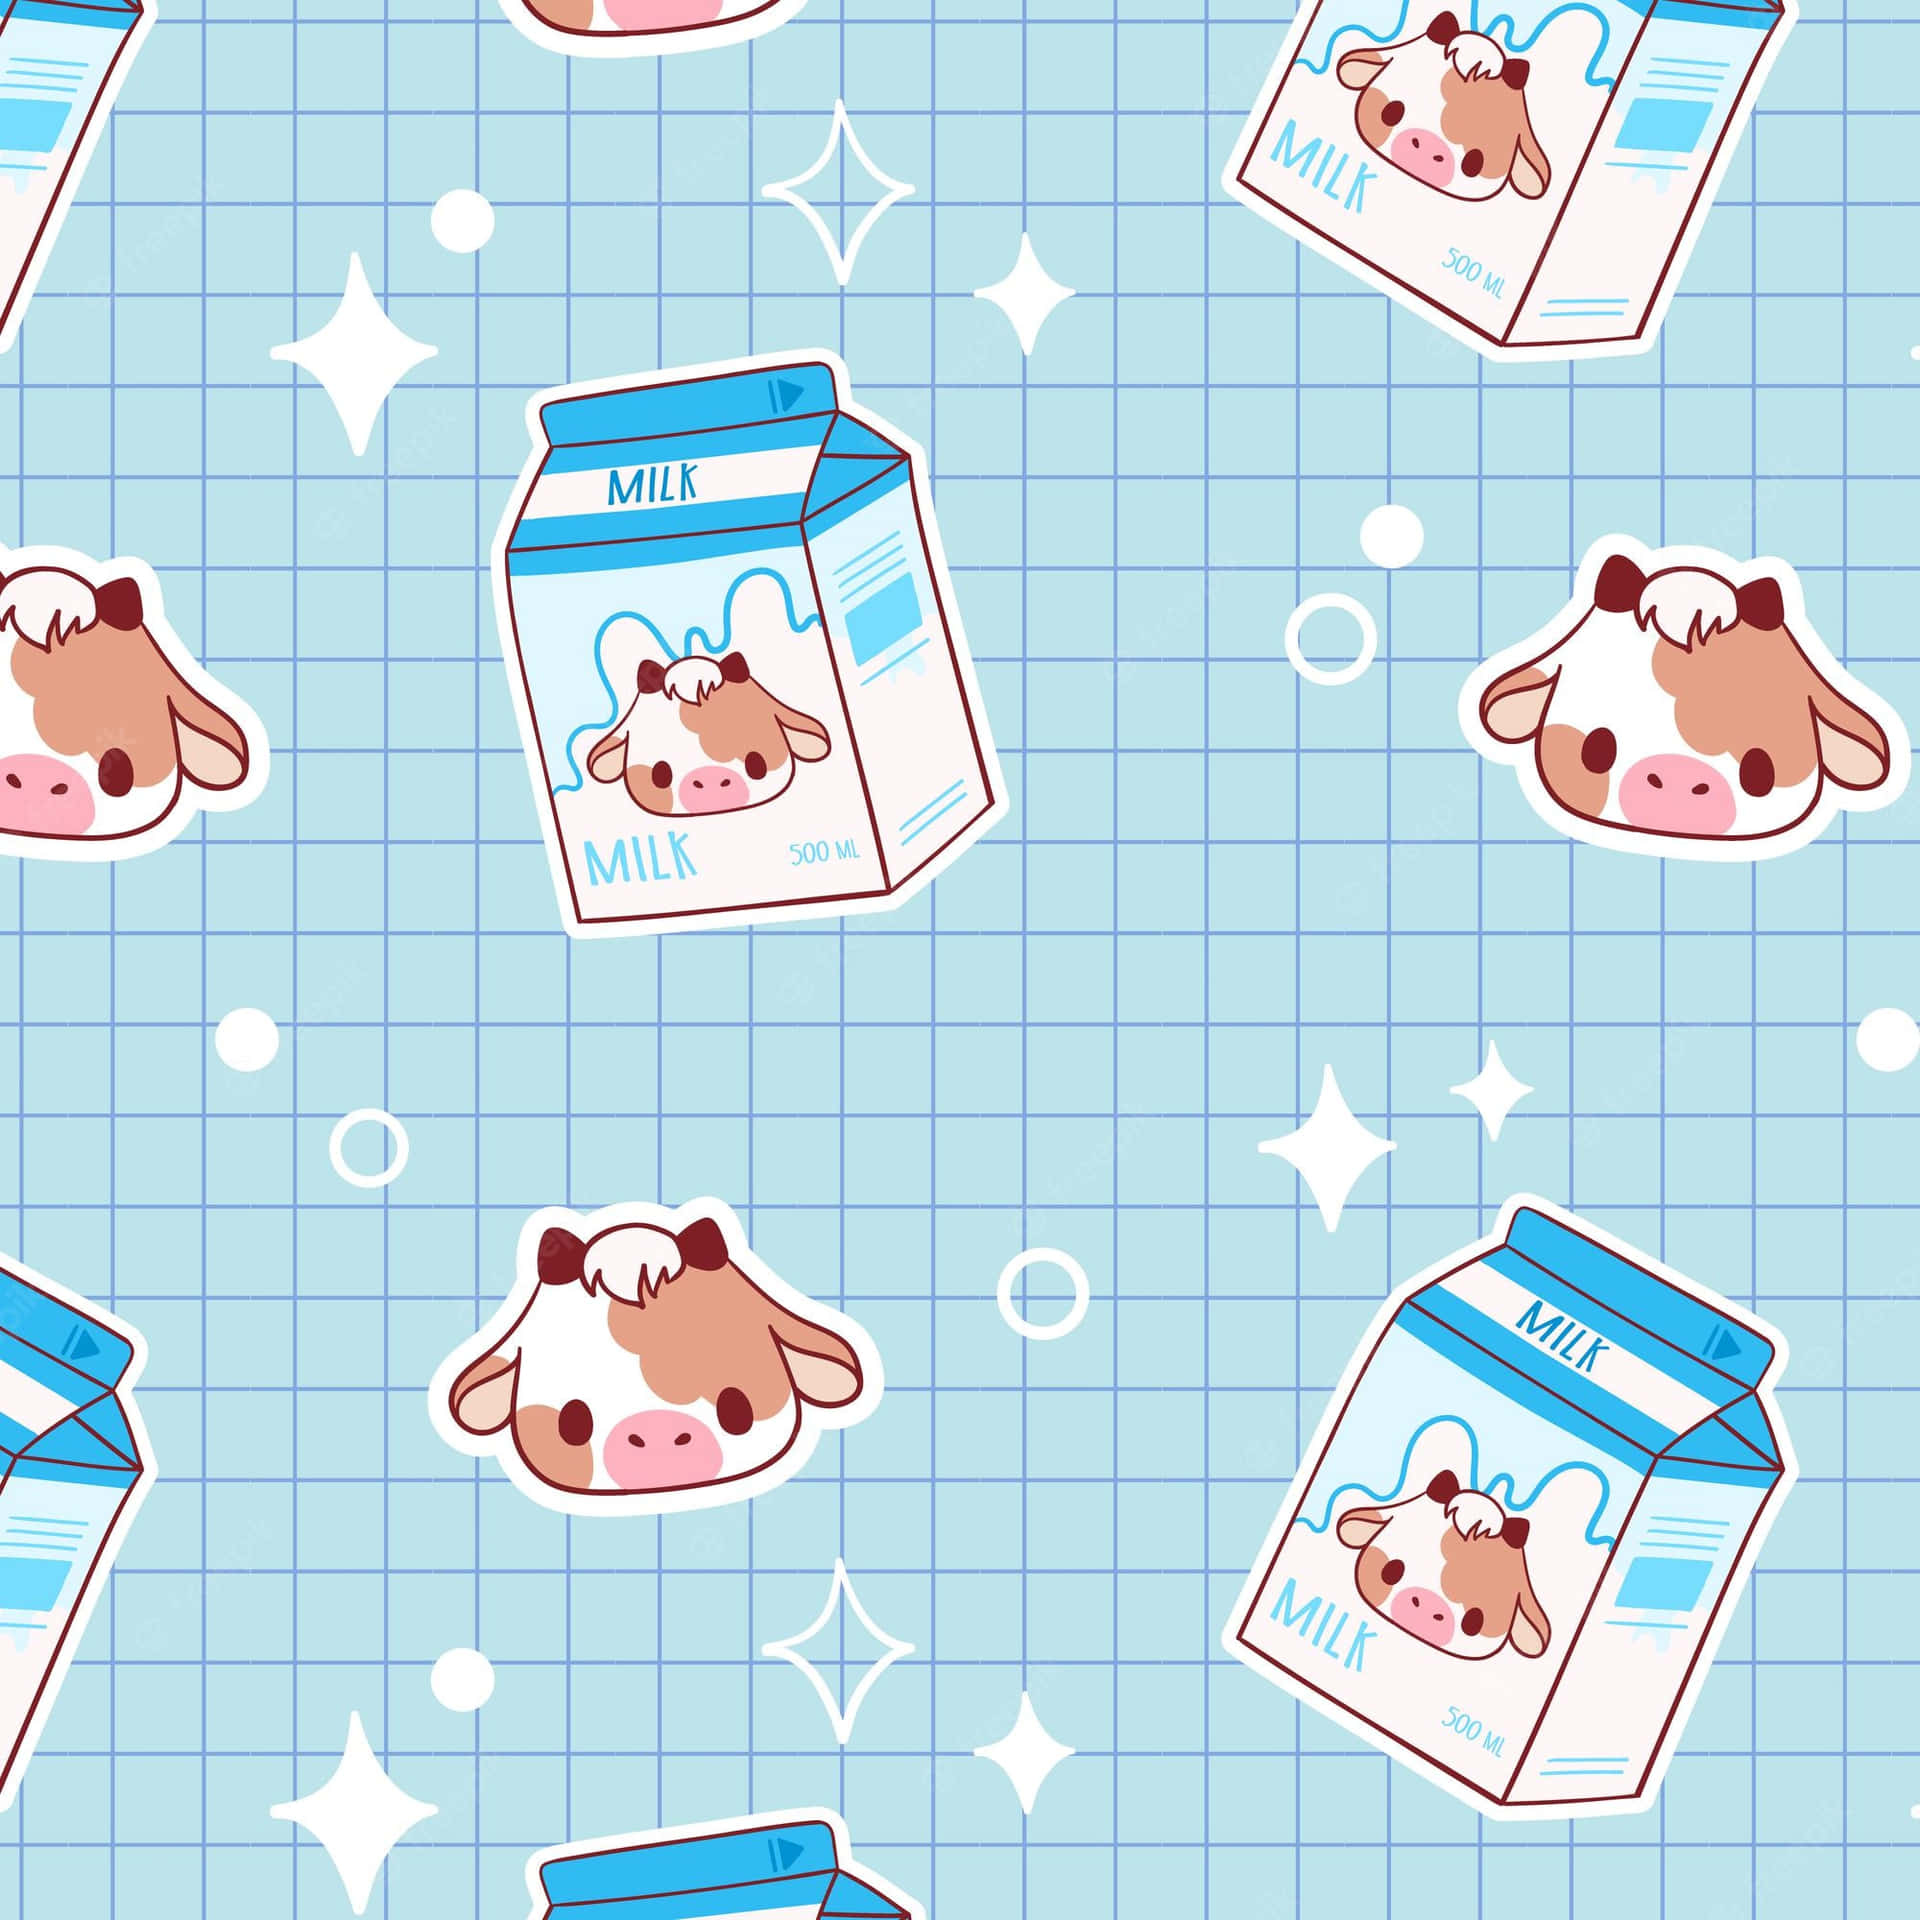 100+] Kawaii Cute Cow Wallpapers